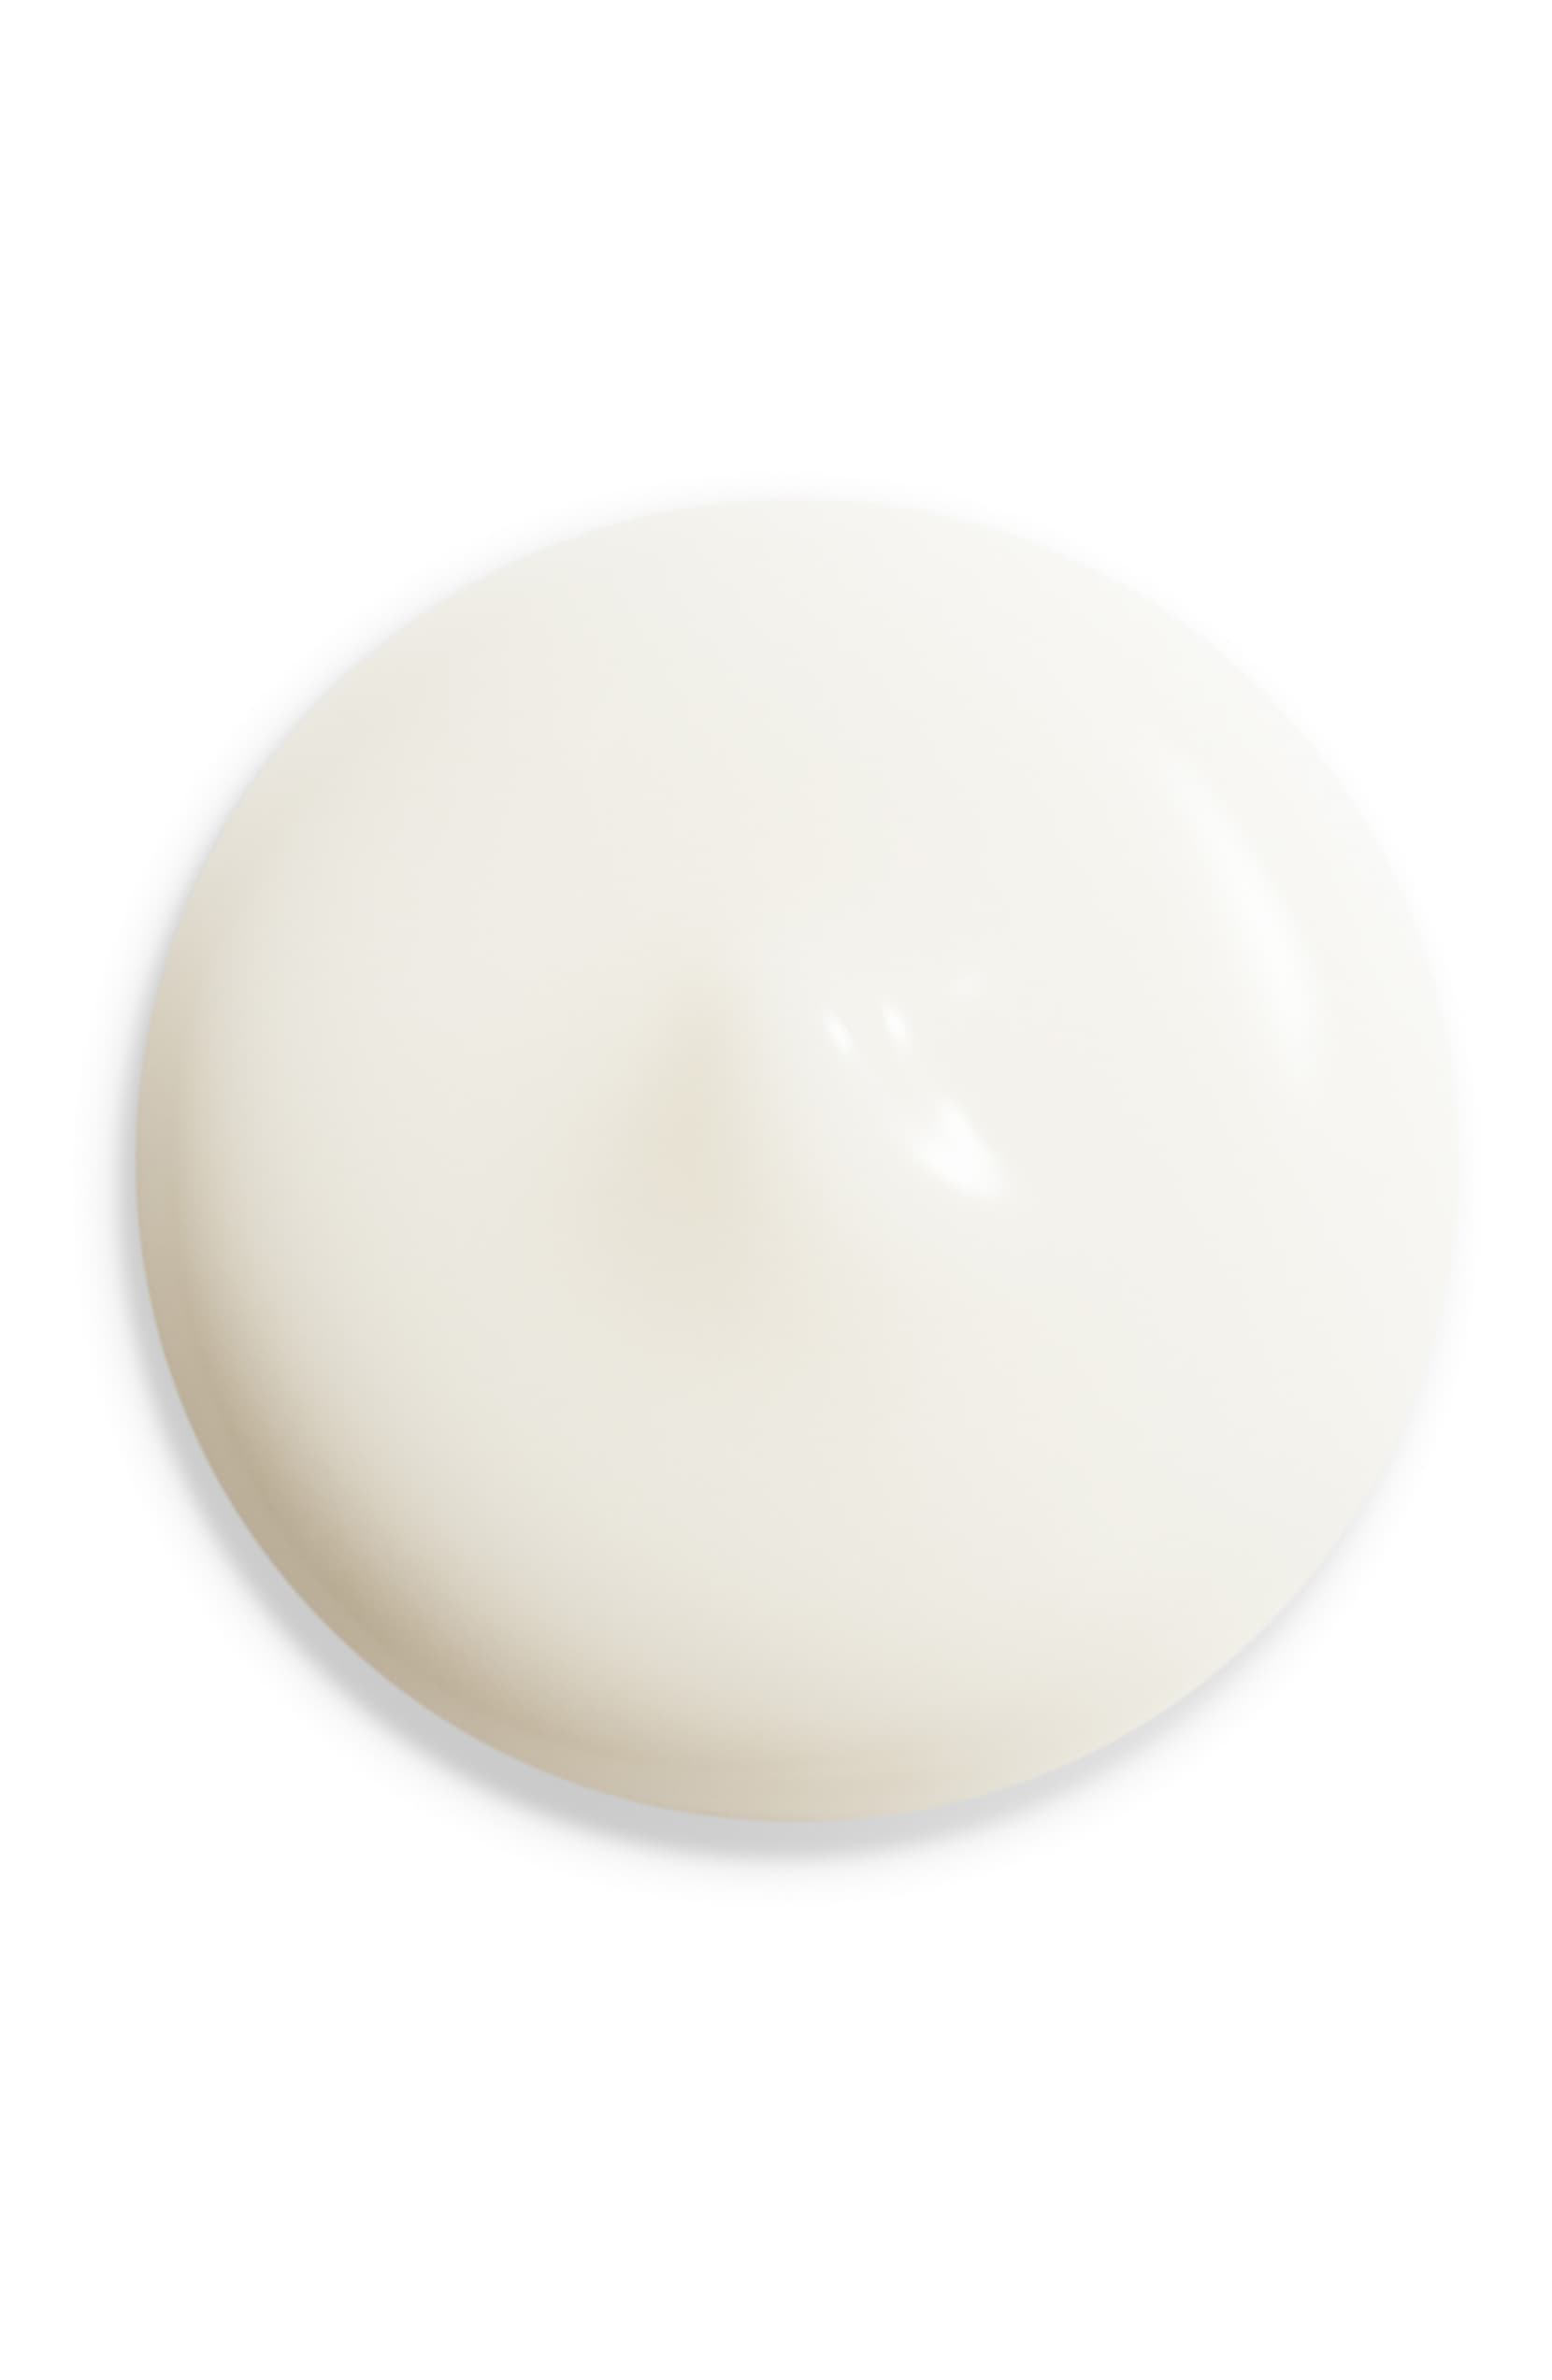 Shiseido White Lucent Illuminating Micro-Spot Serum, 30mL / 1 FL. OZ - eCosmeticWorld